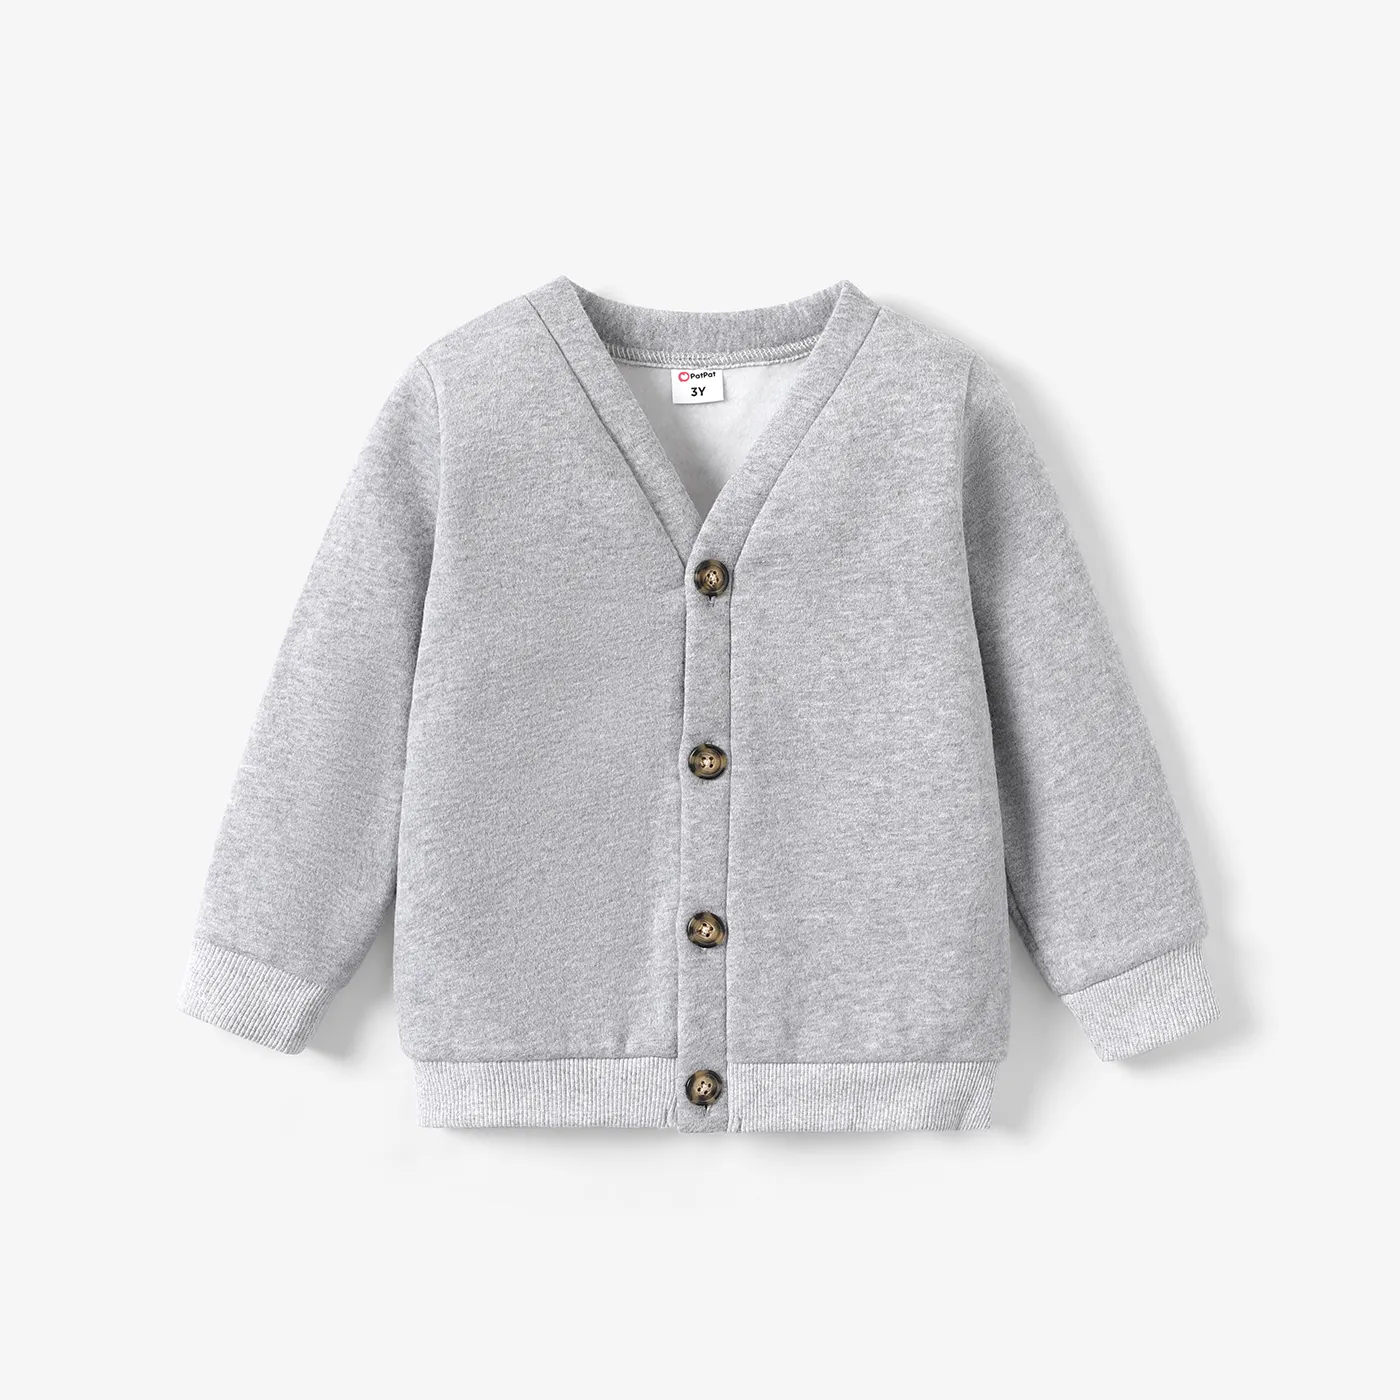 Toddler Boy Solid Color Knit Cardigan Manteaux / Vestes